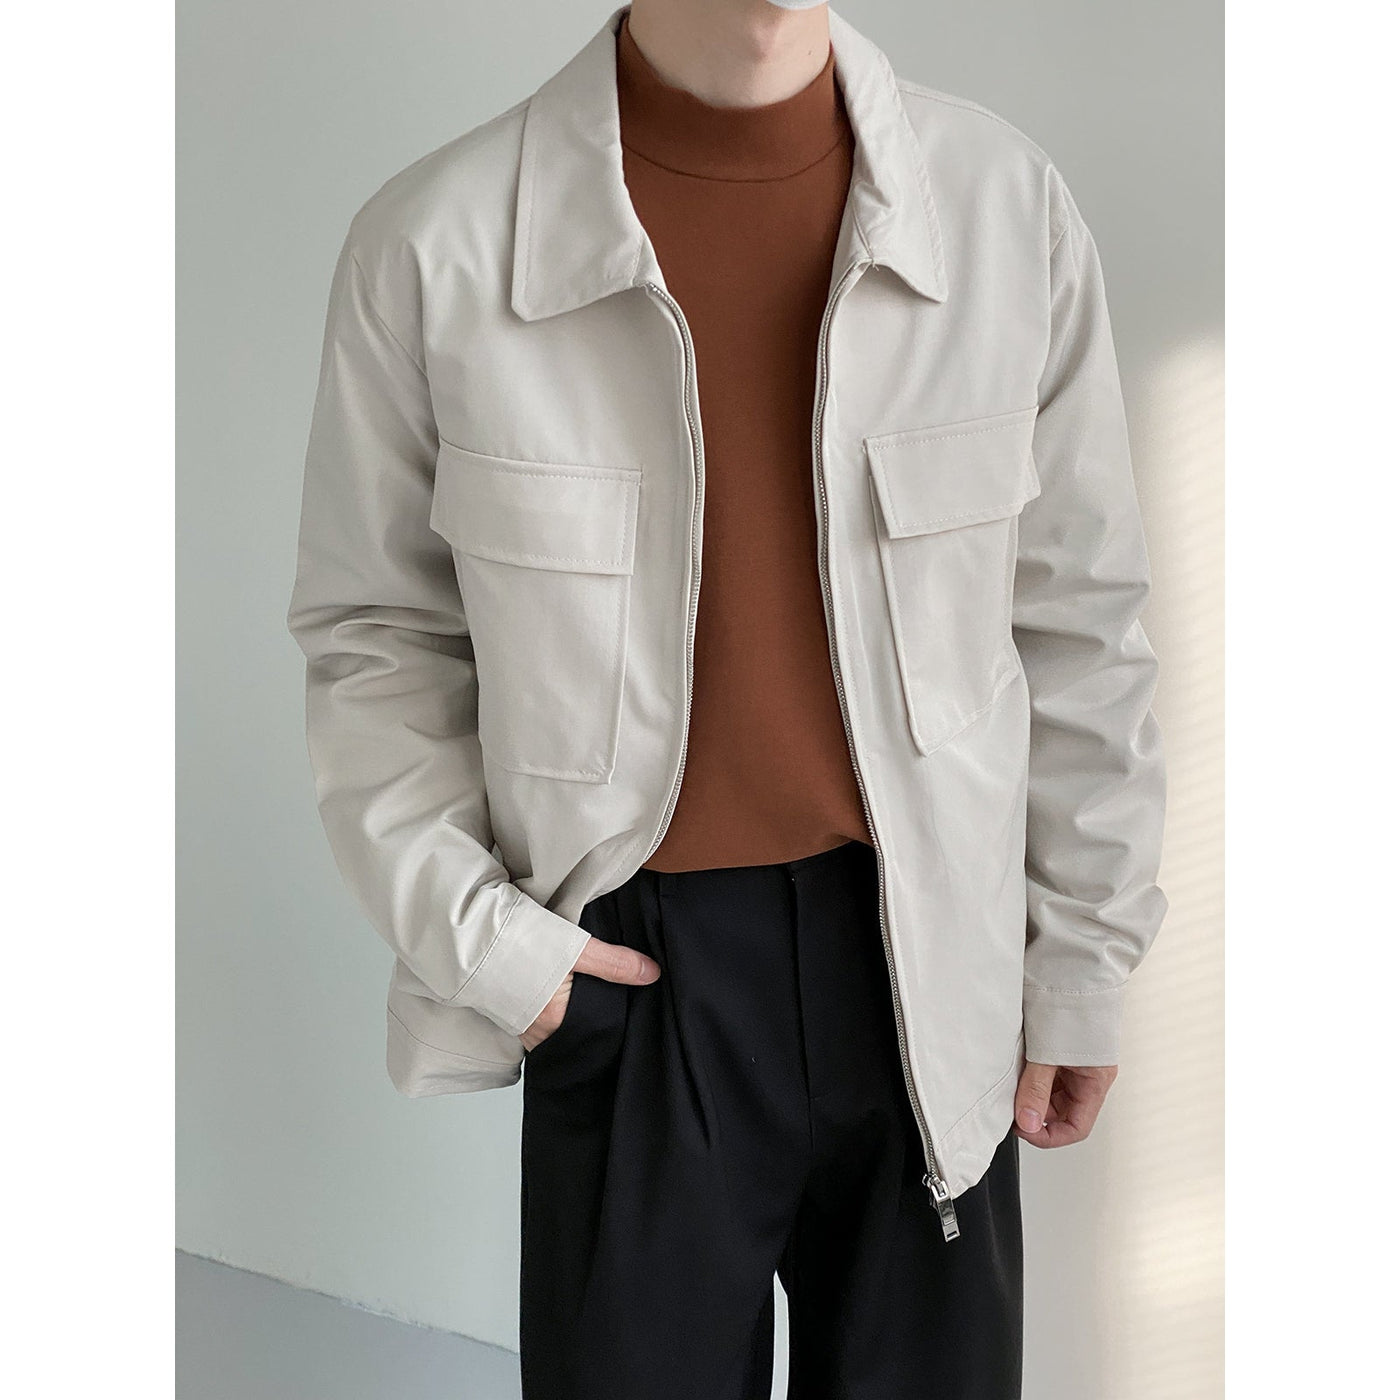 Zhou Front Pockets with Flap Jacket-korean-fashion-Jacket-Zhou's Closet-OH Garments